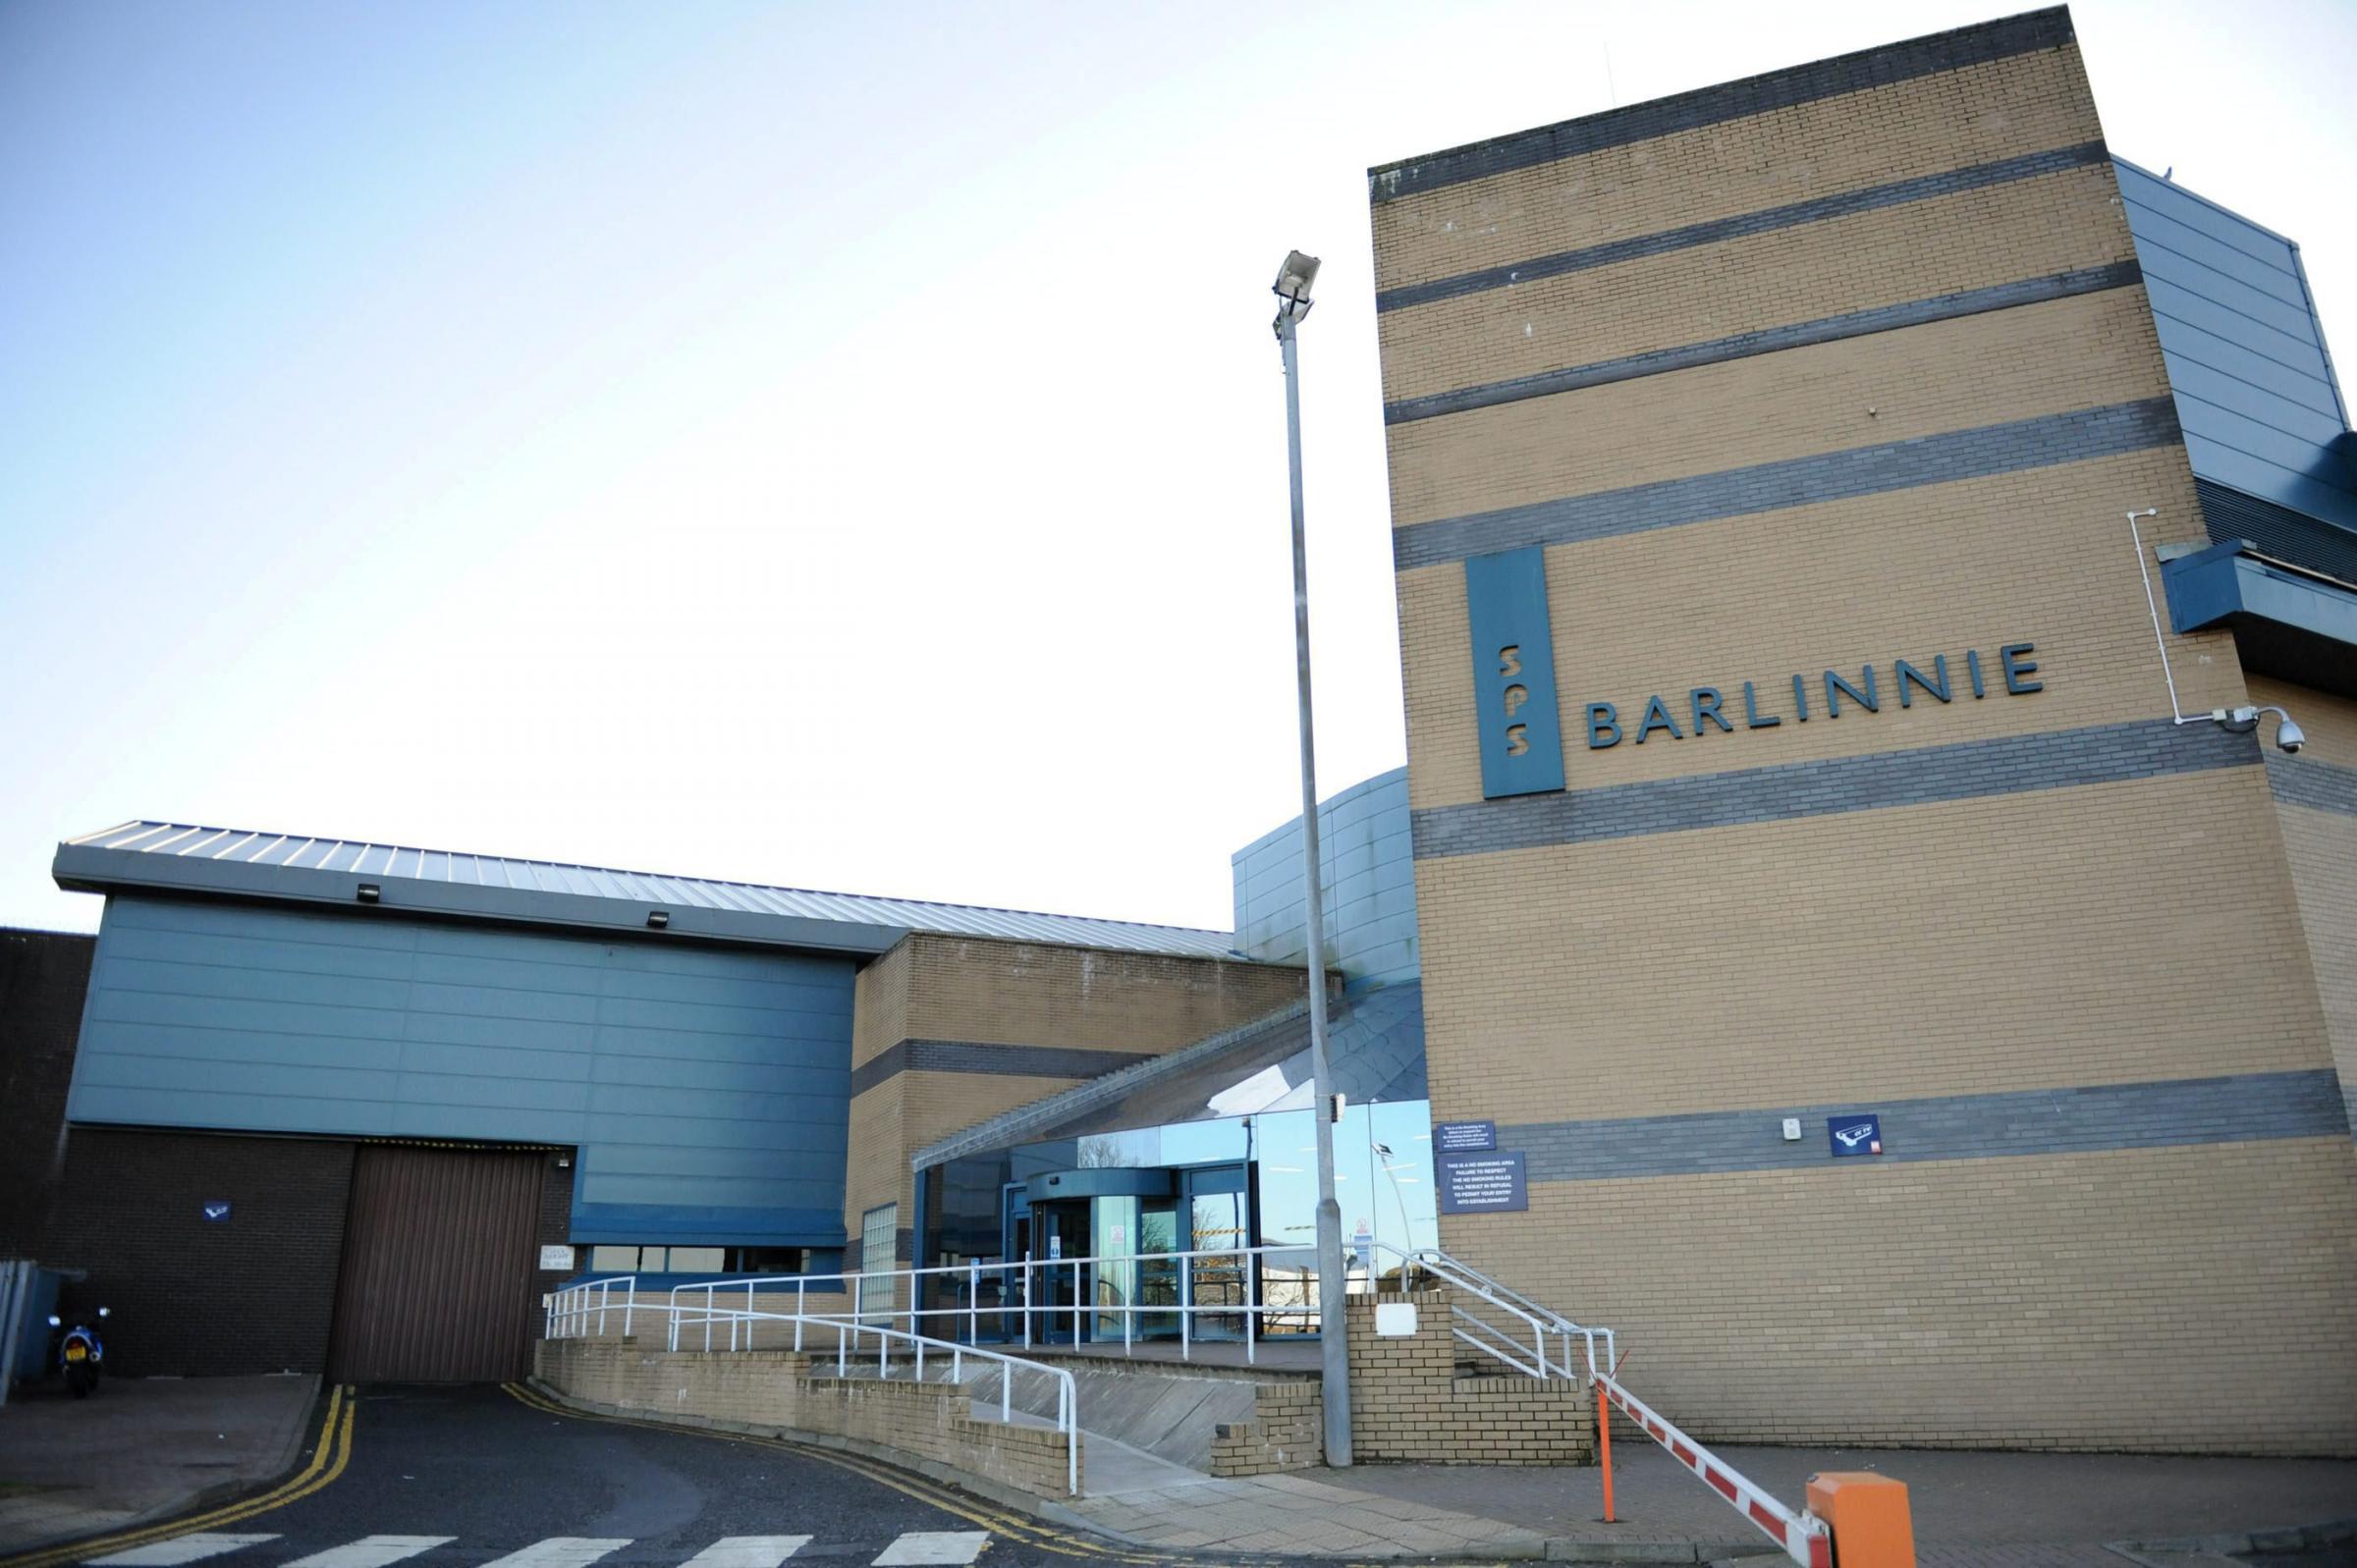 'Prisoner falls from third floor' at Glasgow's Barlinnie